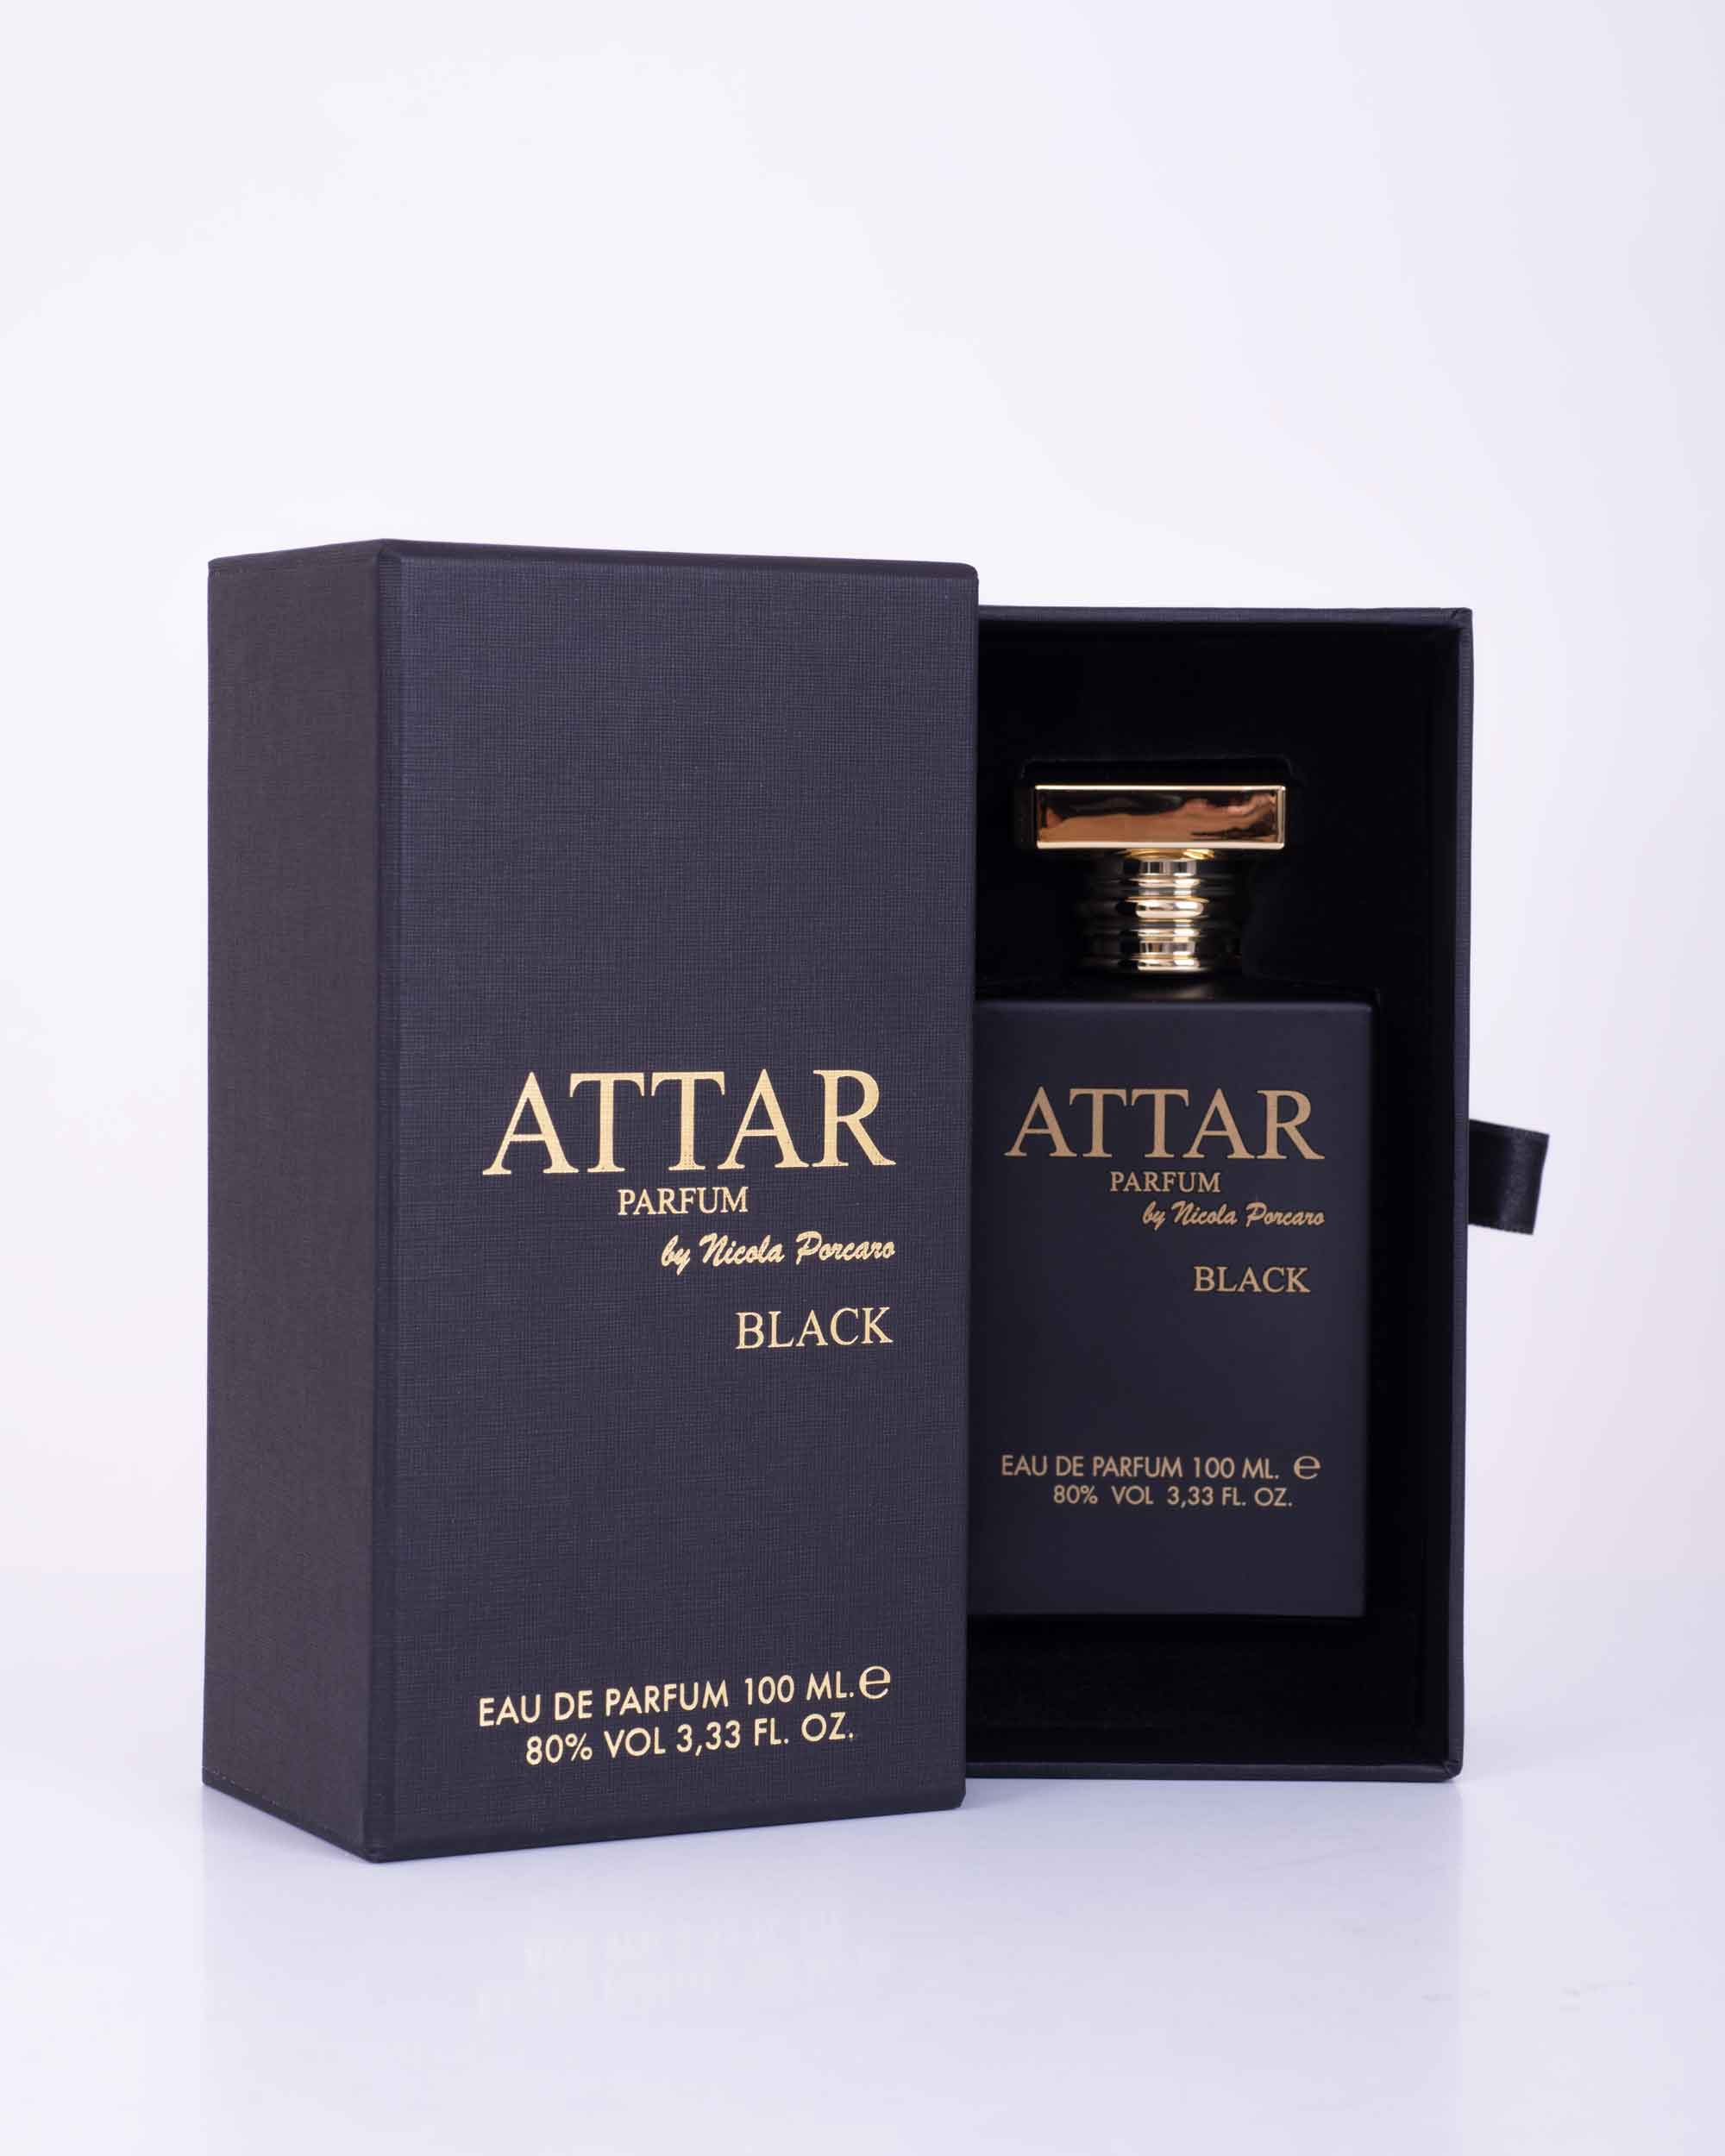 ATTAR Parfum Black